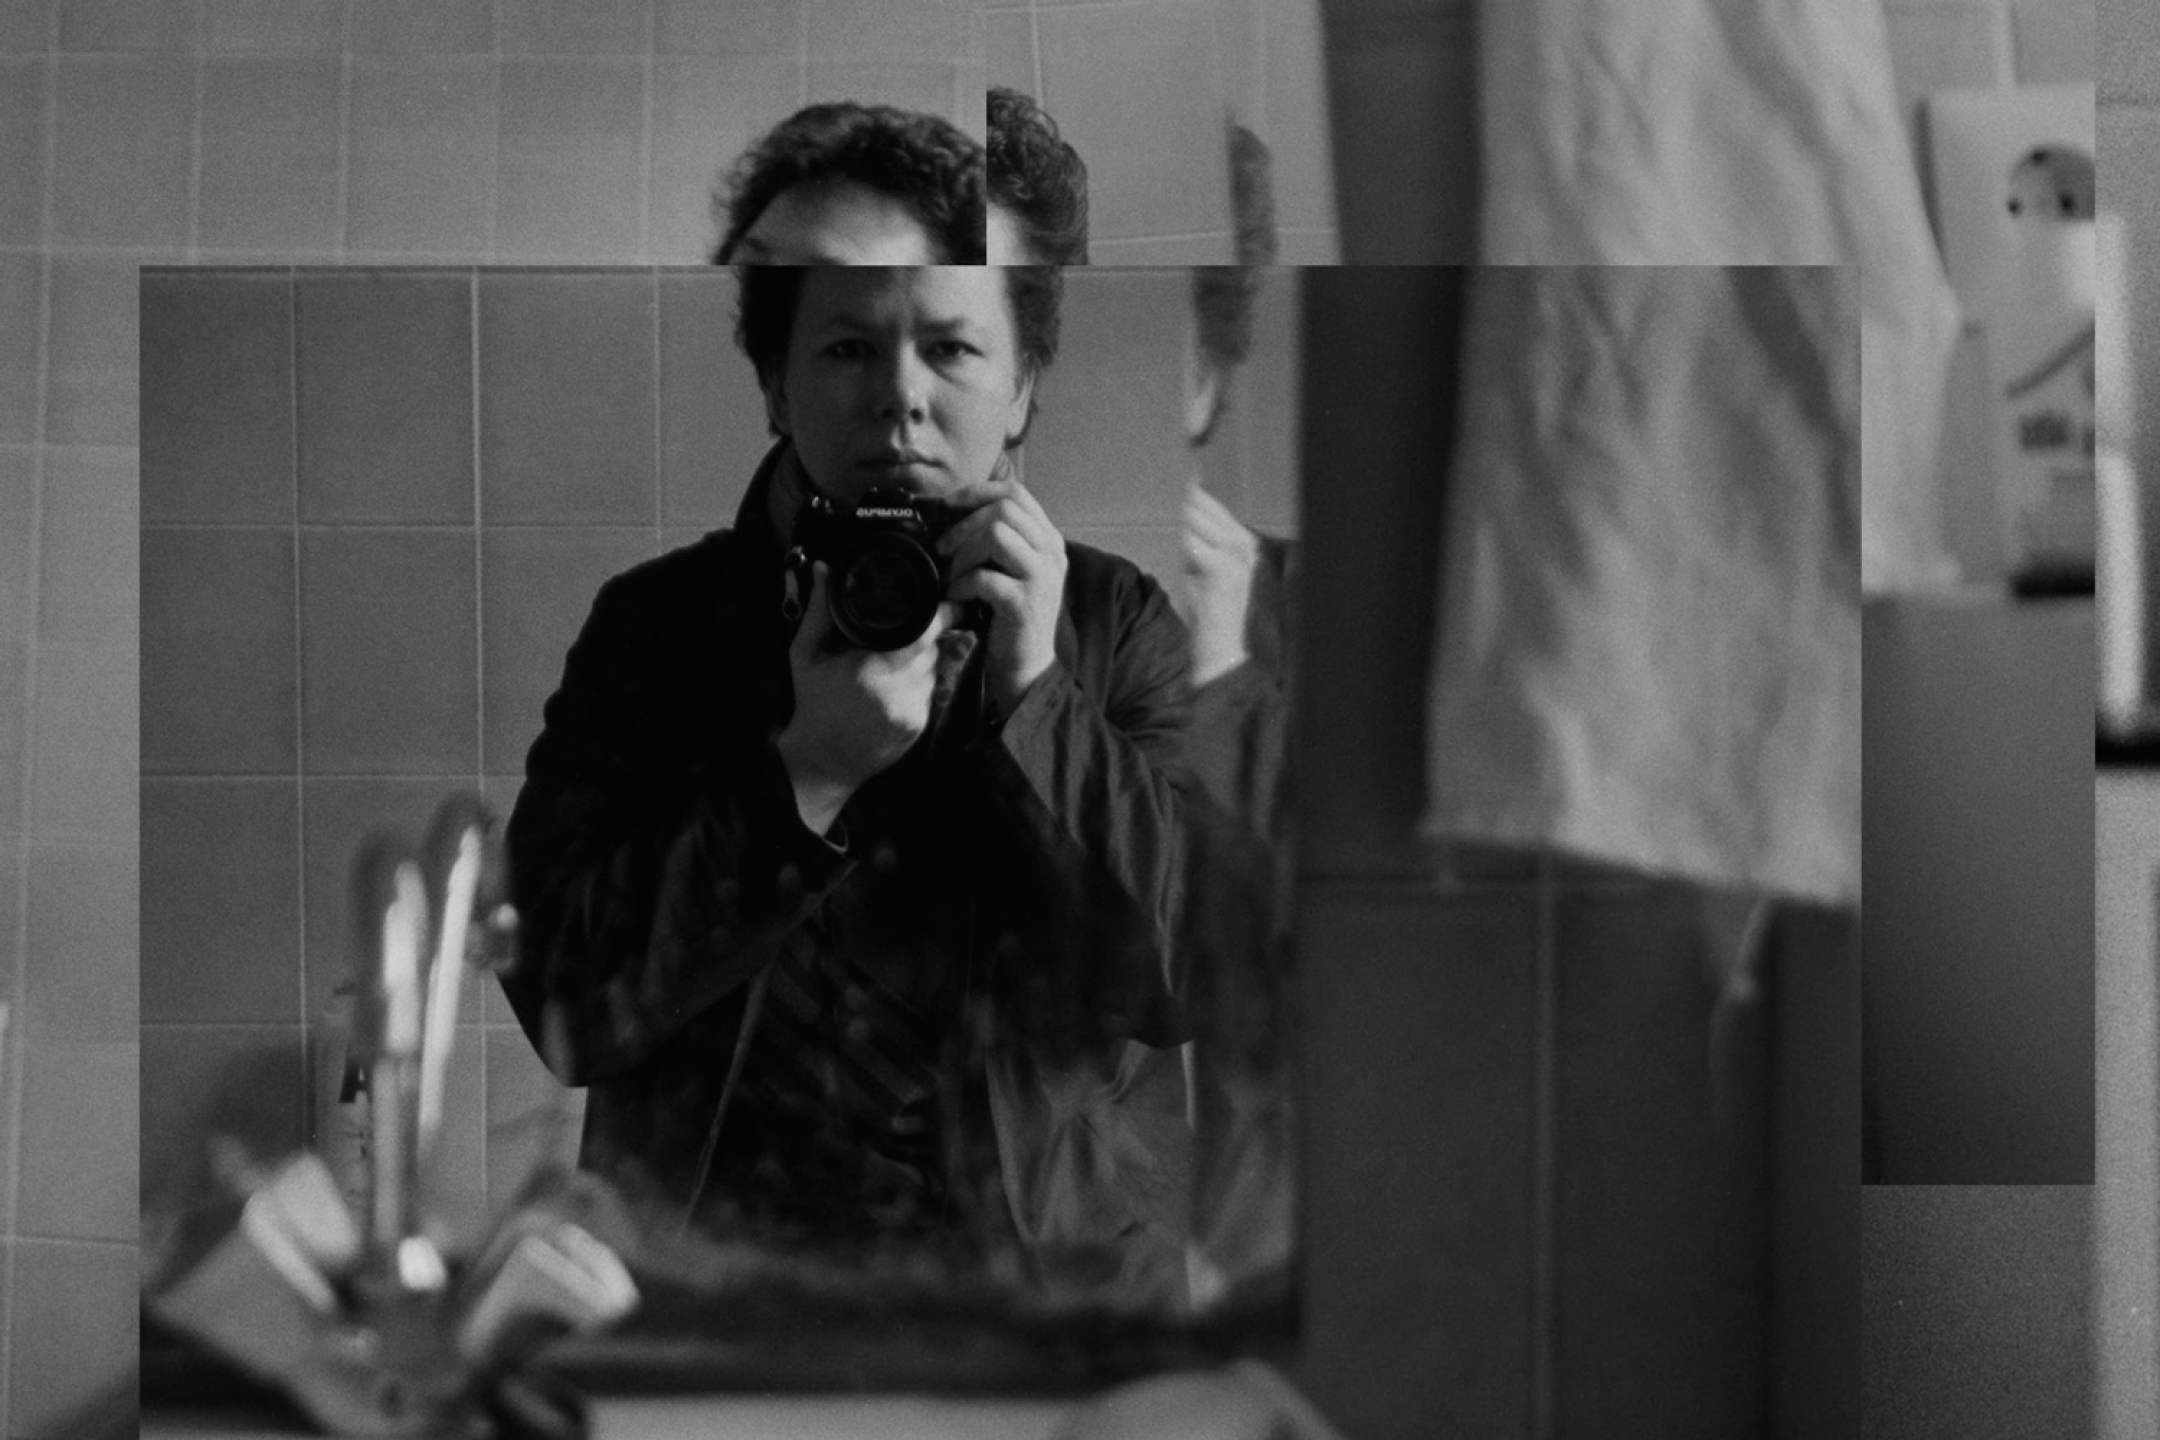 A woman takes a selfie in the bathroom mirror.